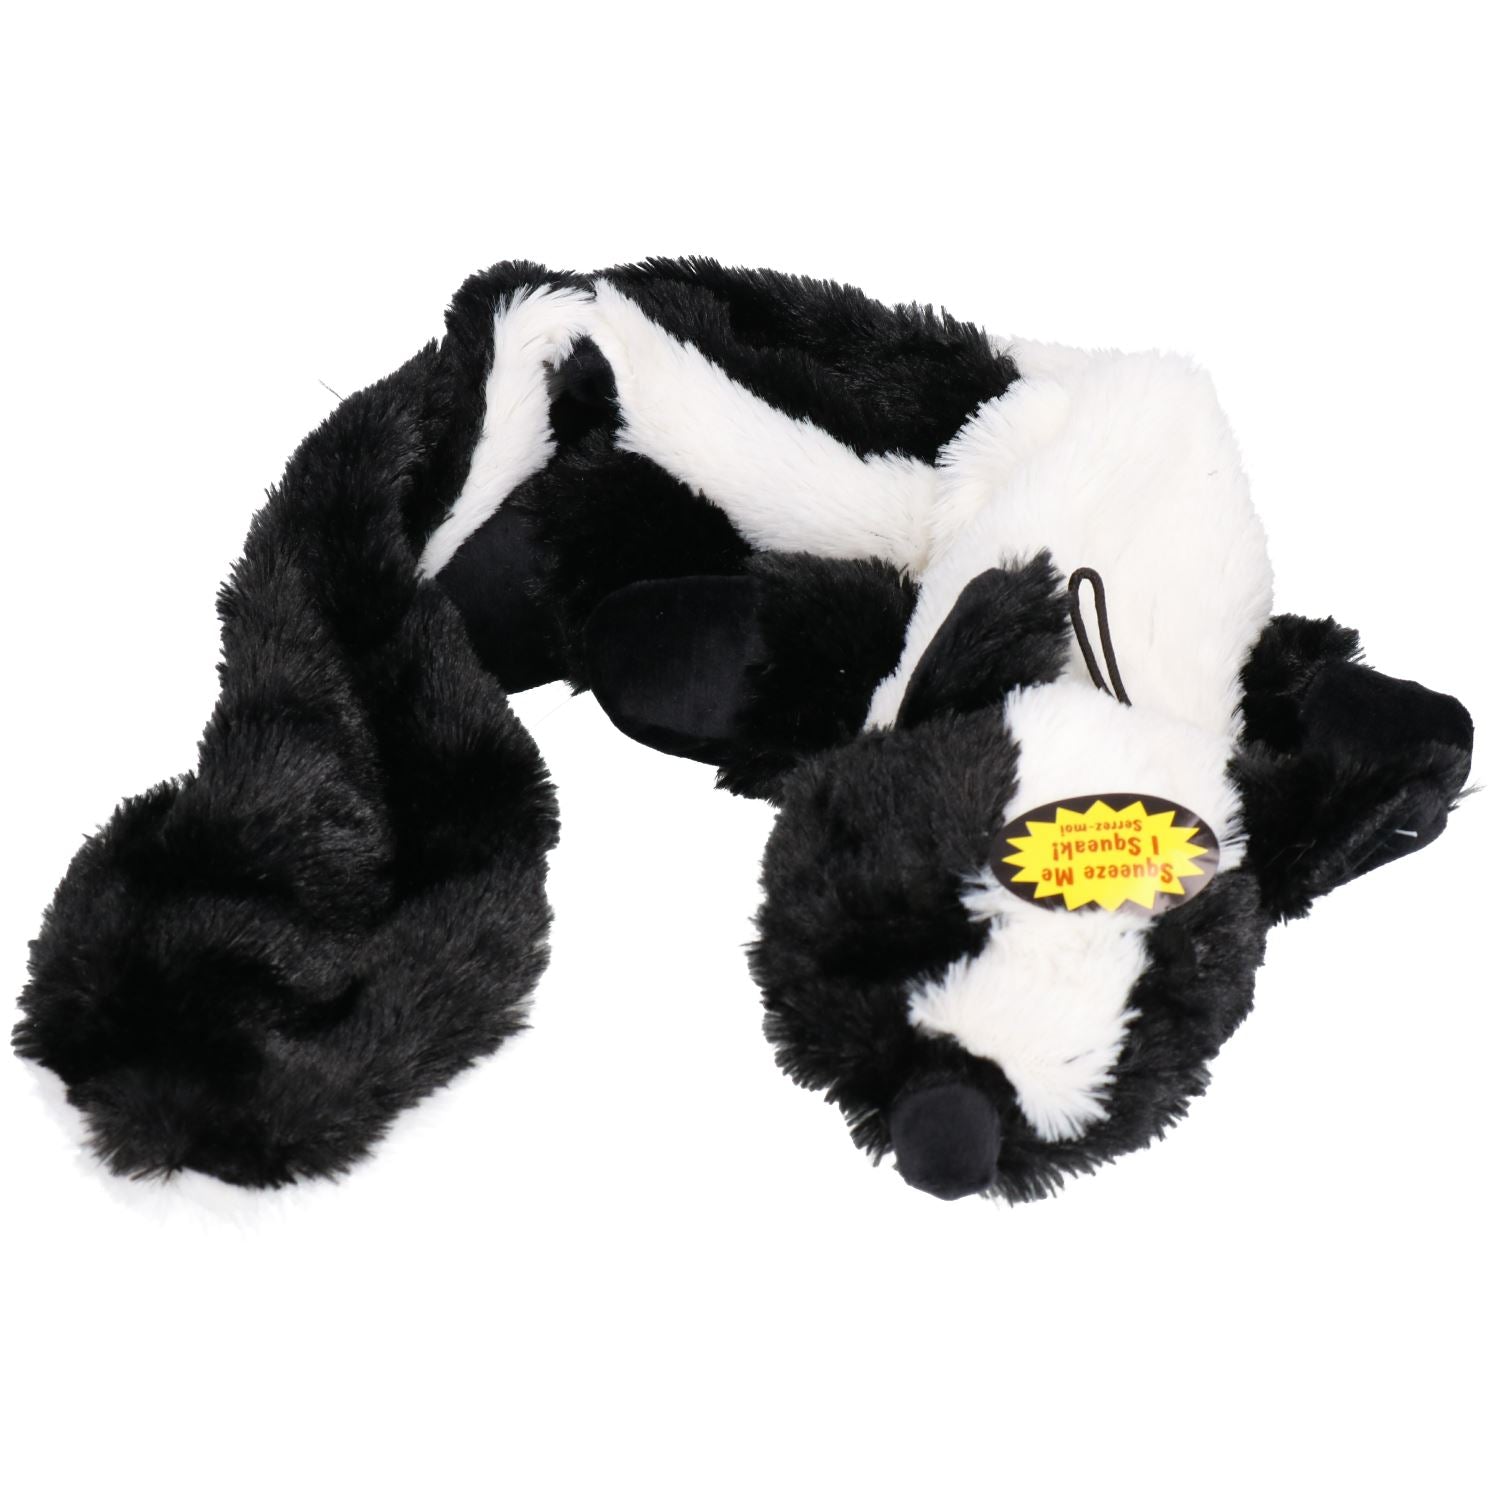 Plush Super Soft Unstuffed Skunk Dog Toy With Squeak 8x10x58cm